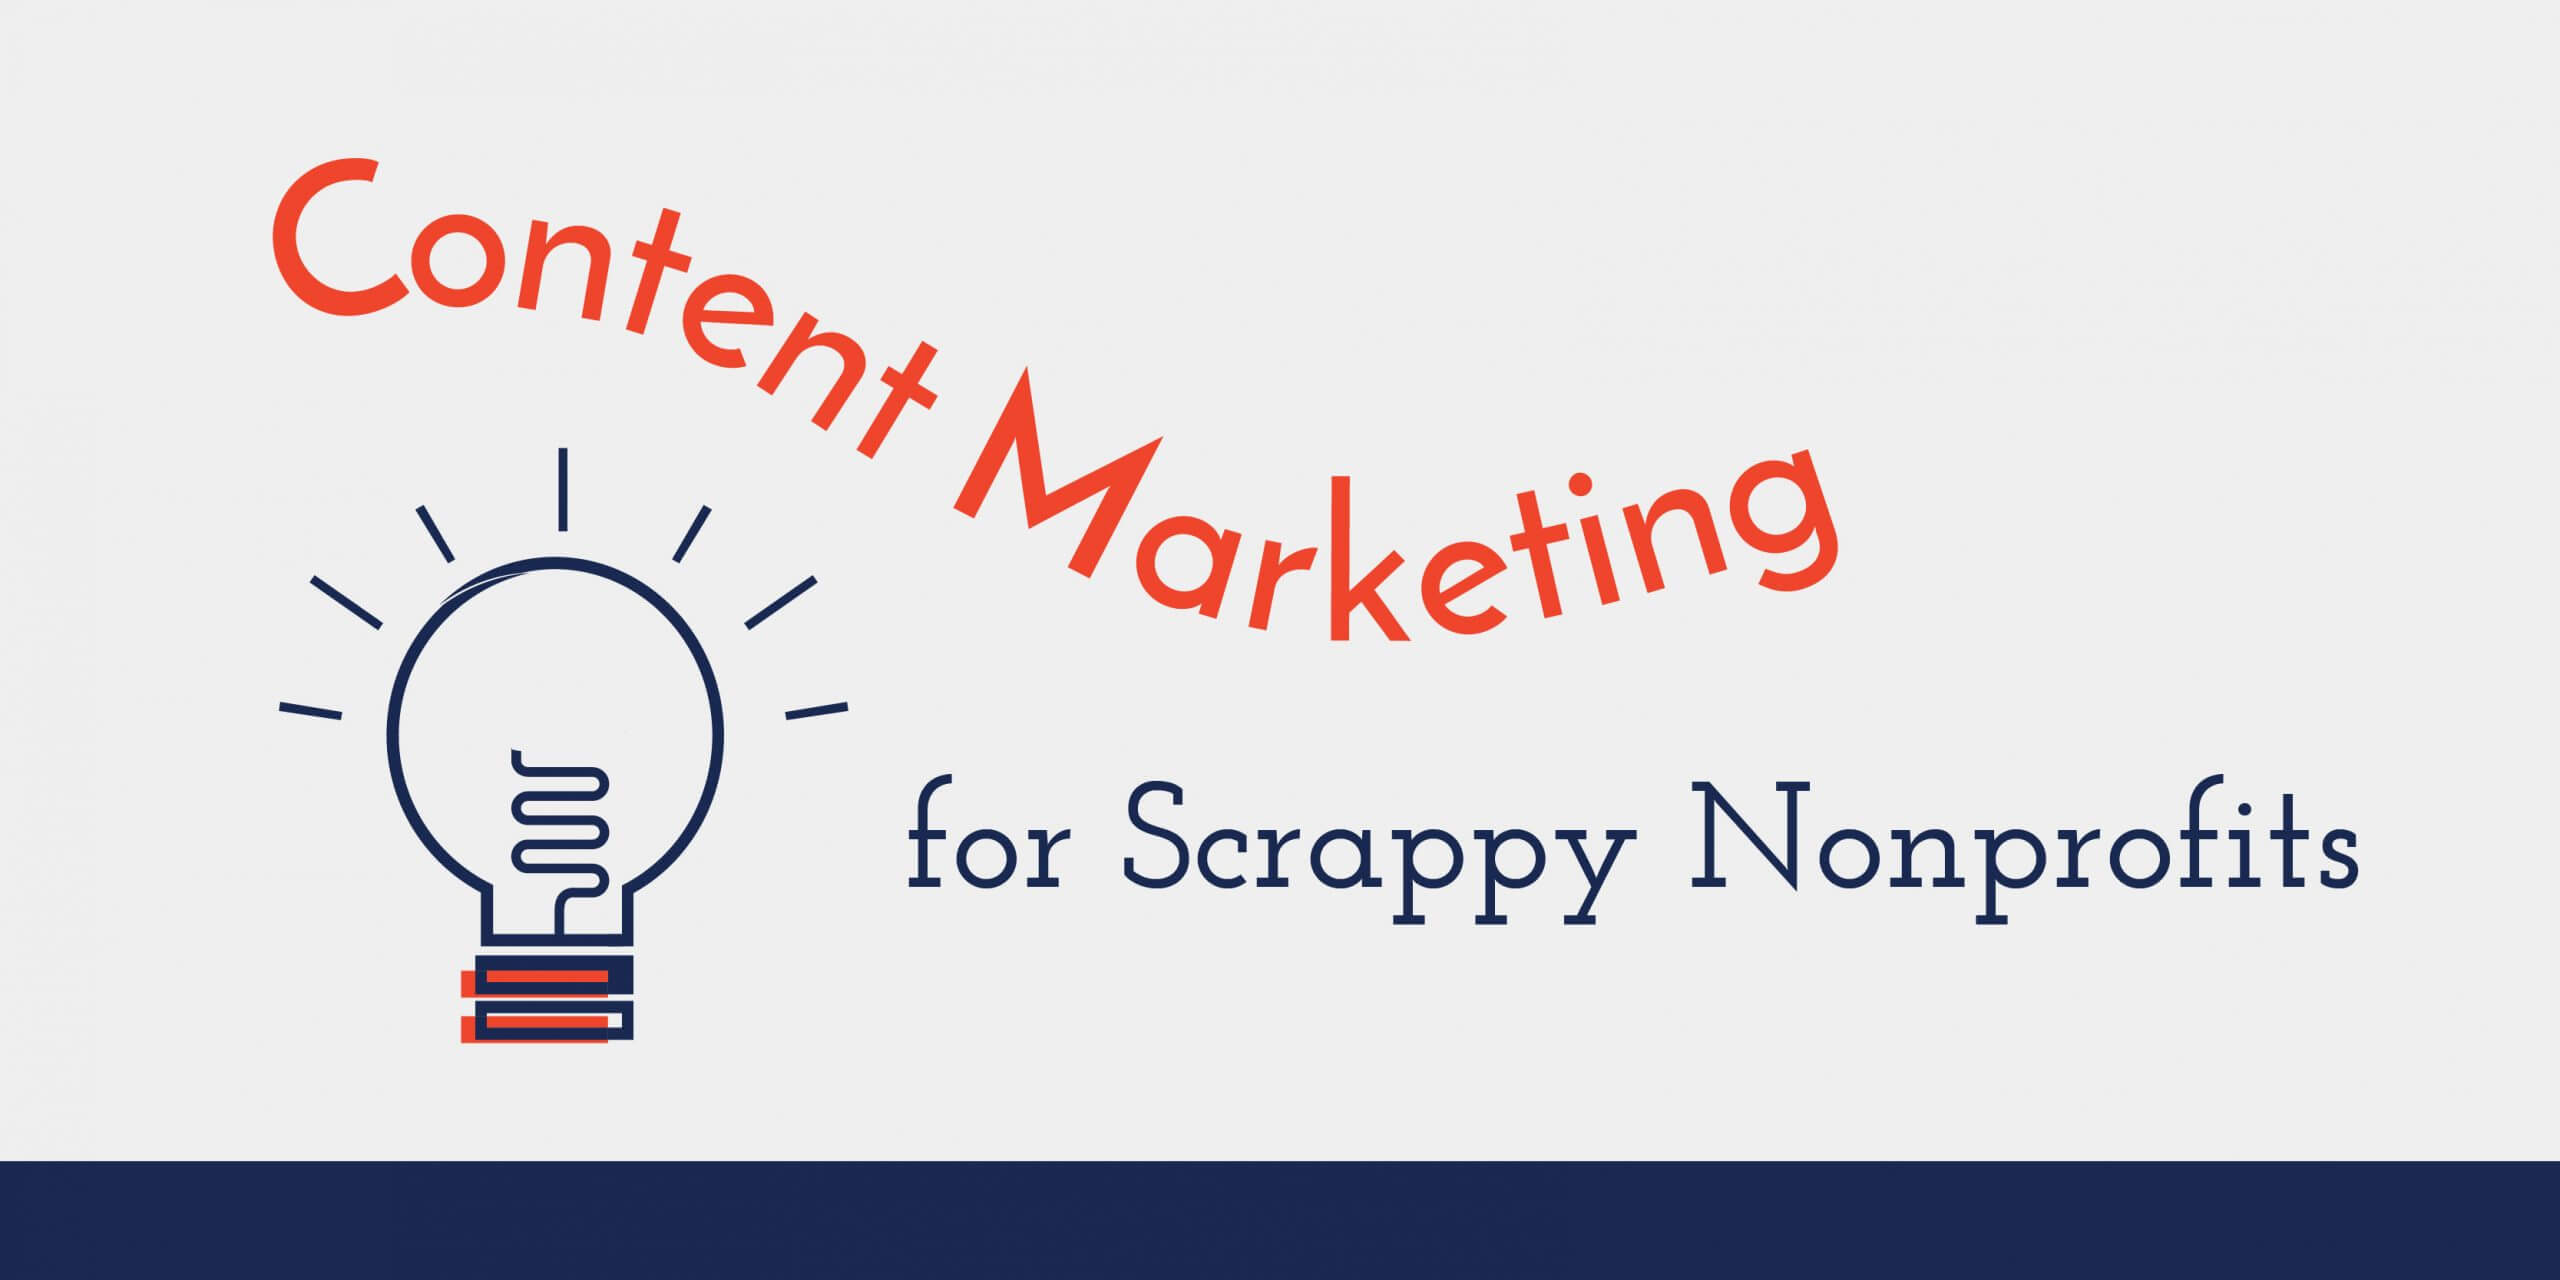 Content Marketing for Scrappy Nonprofits